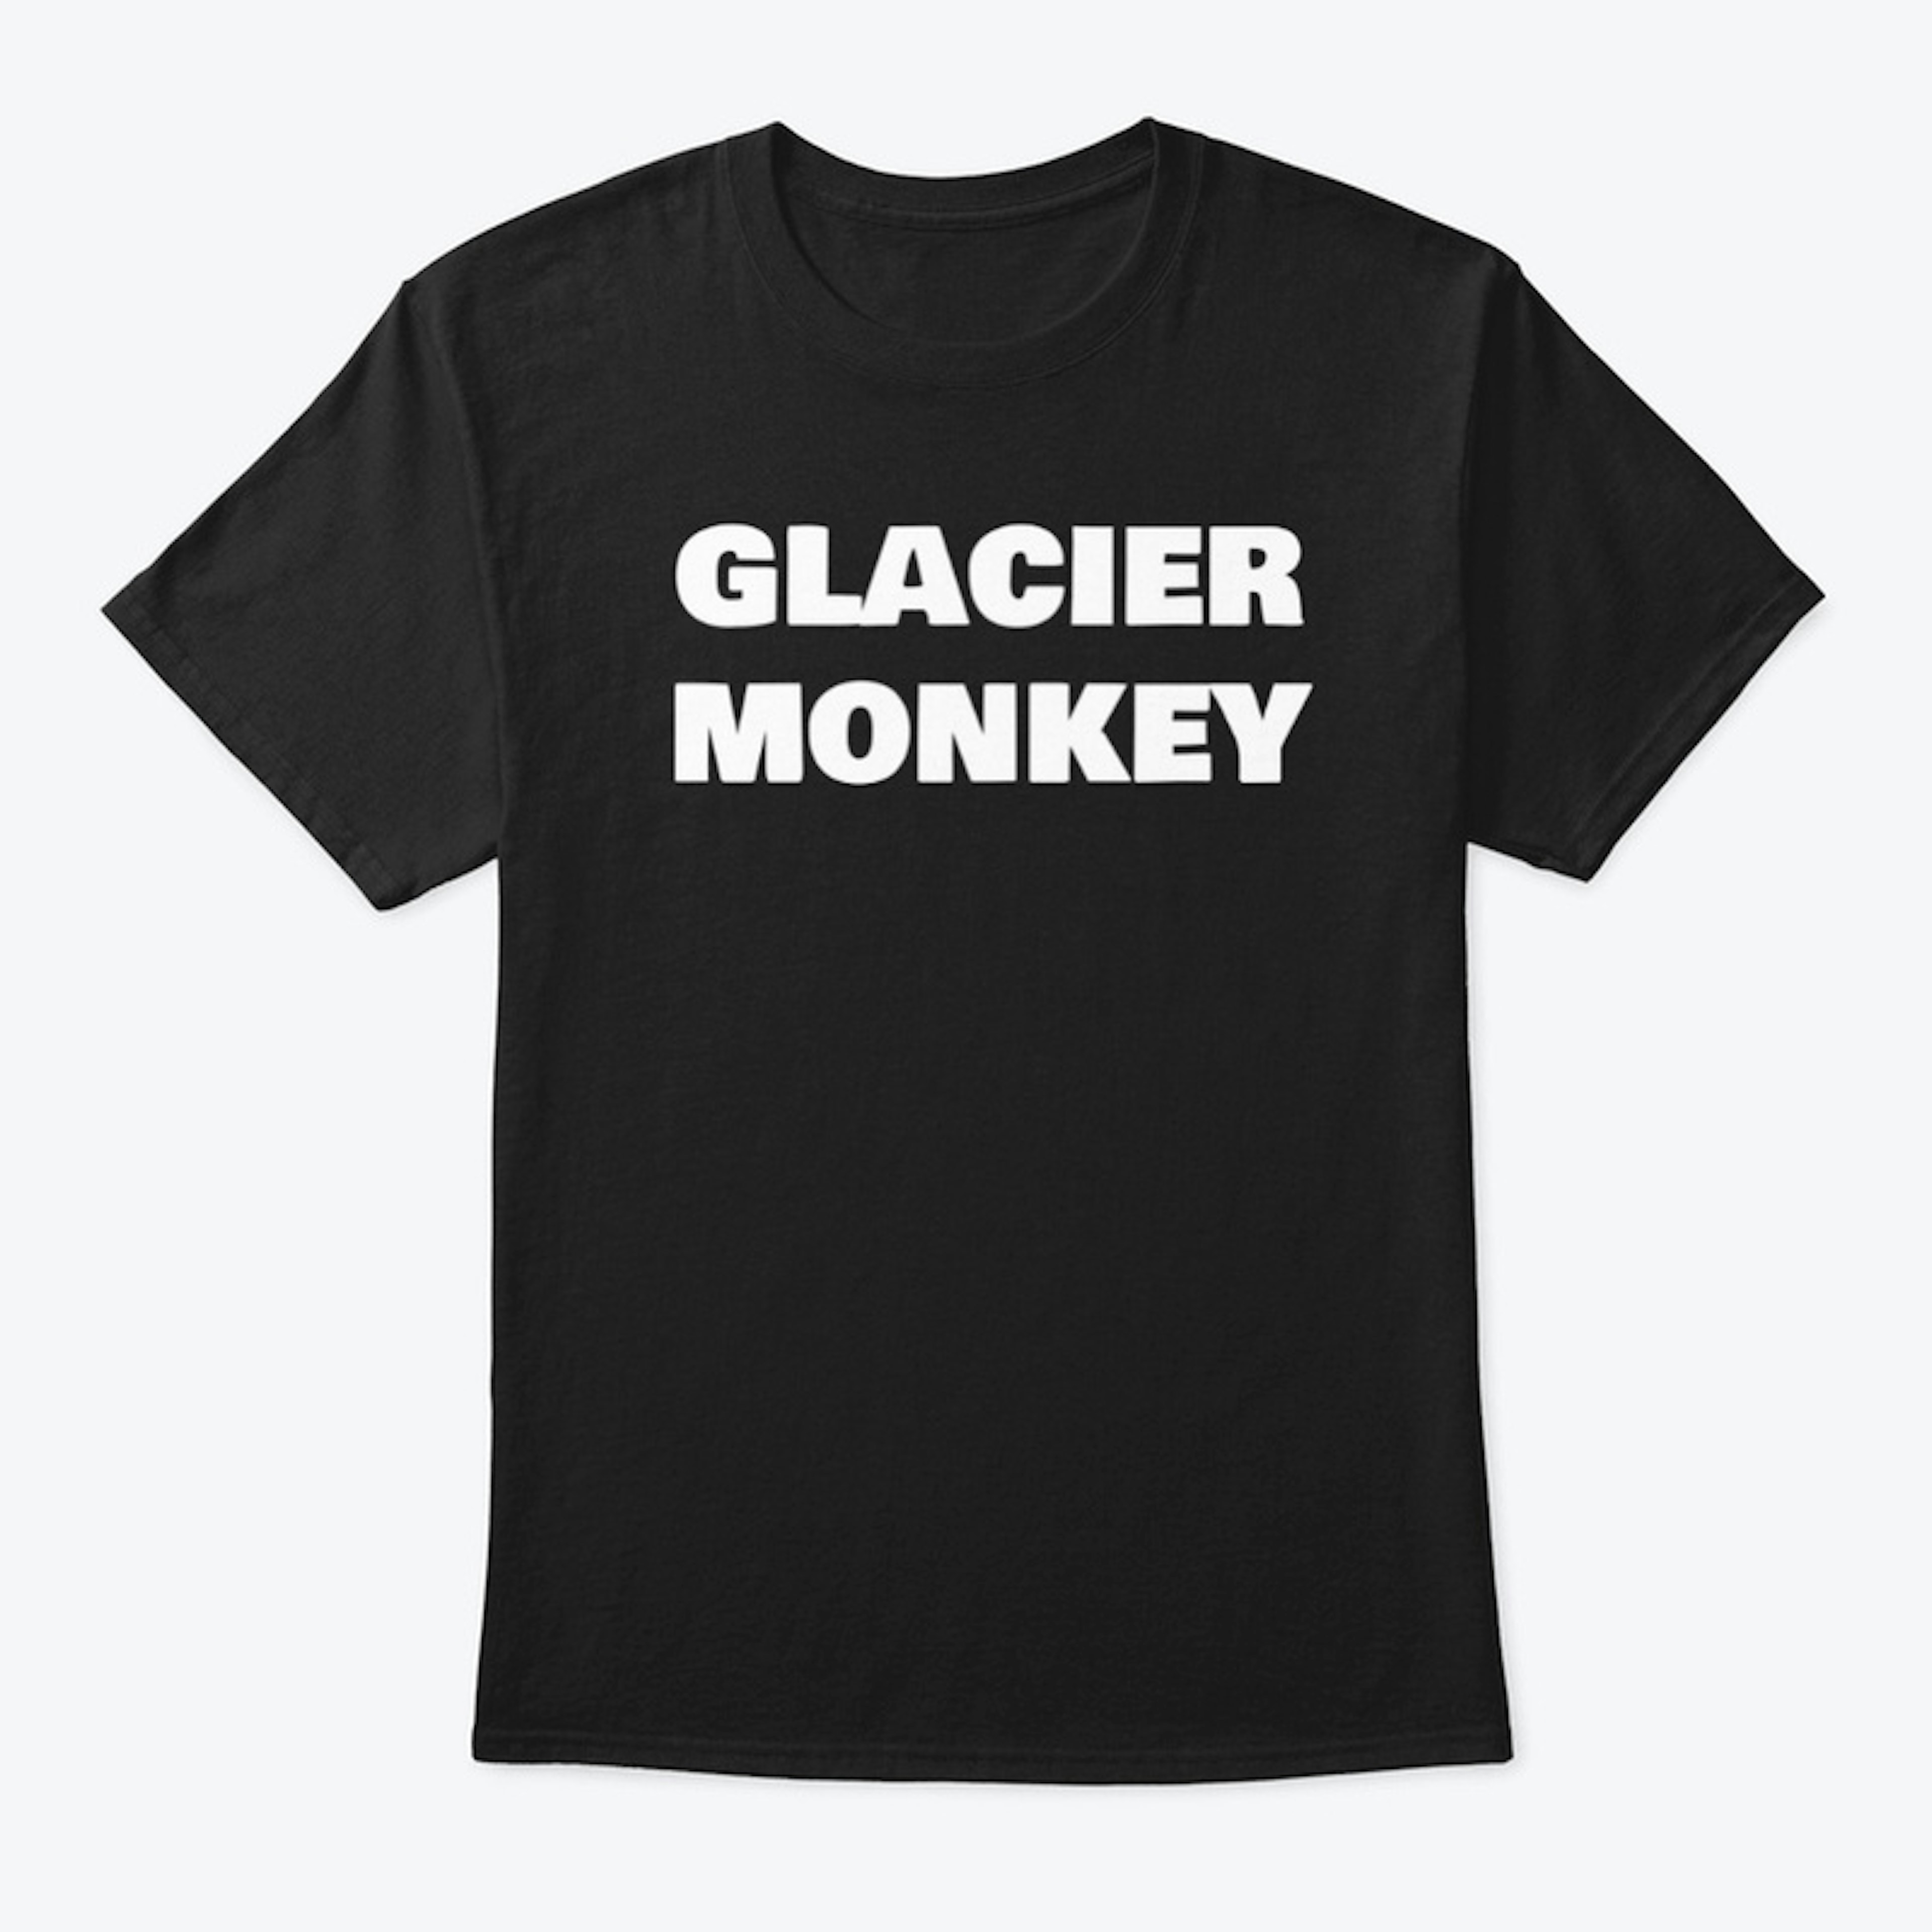 Glacier Monkey